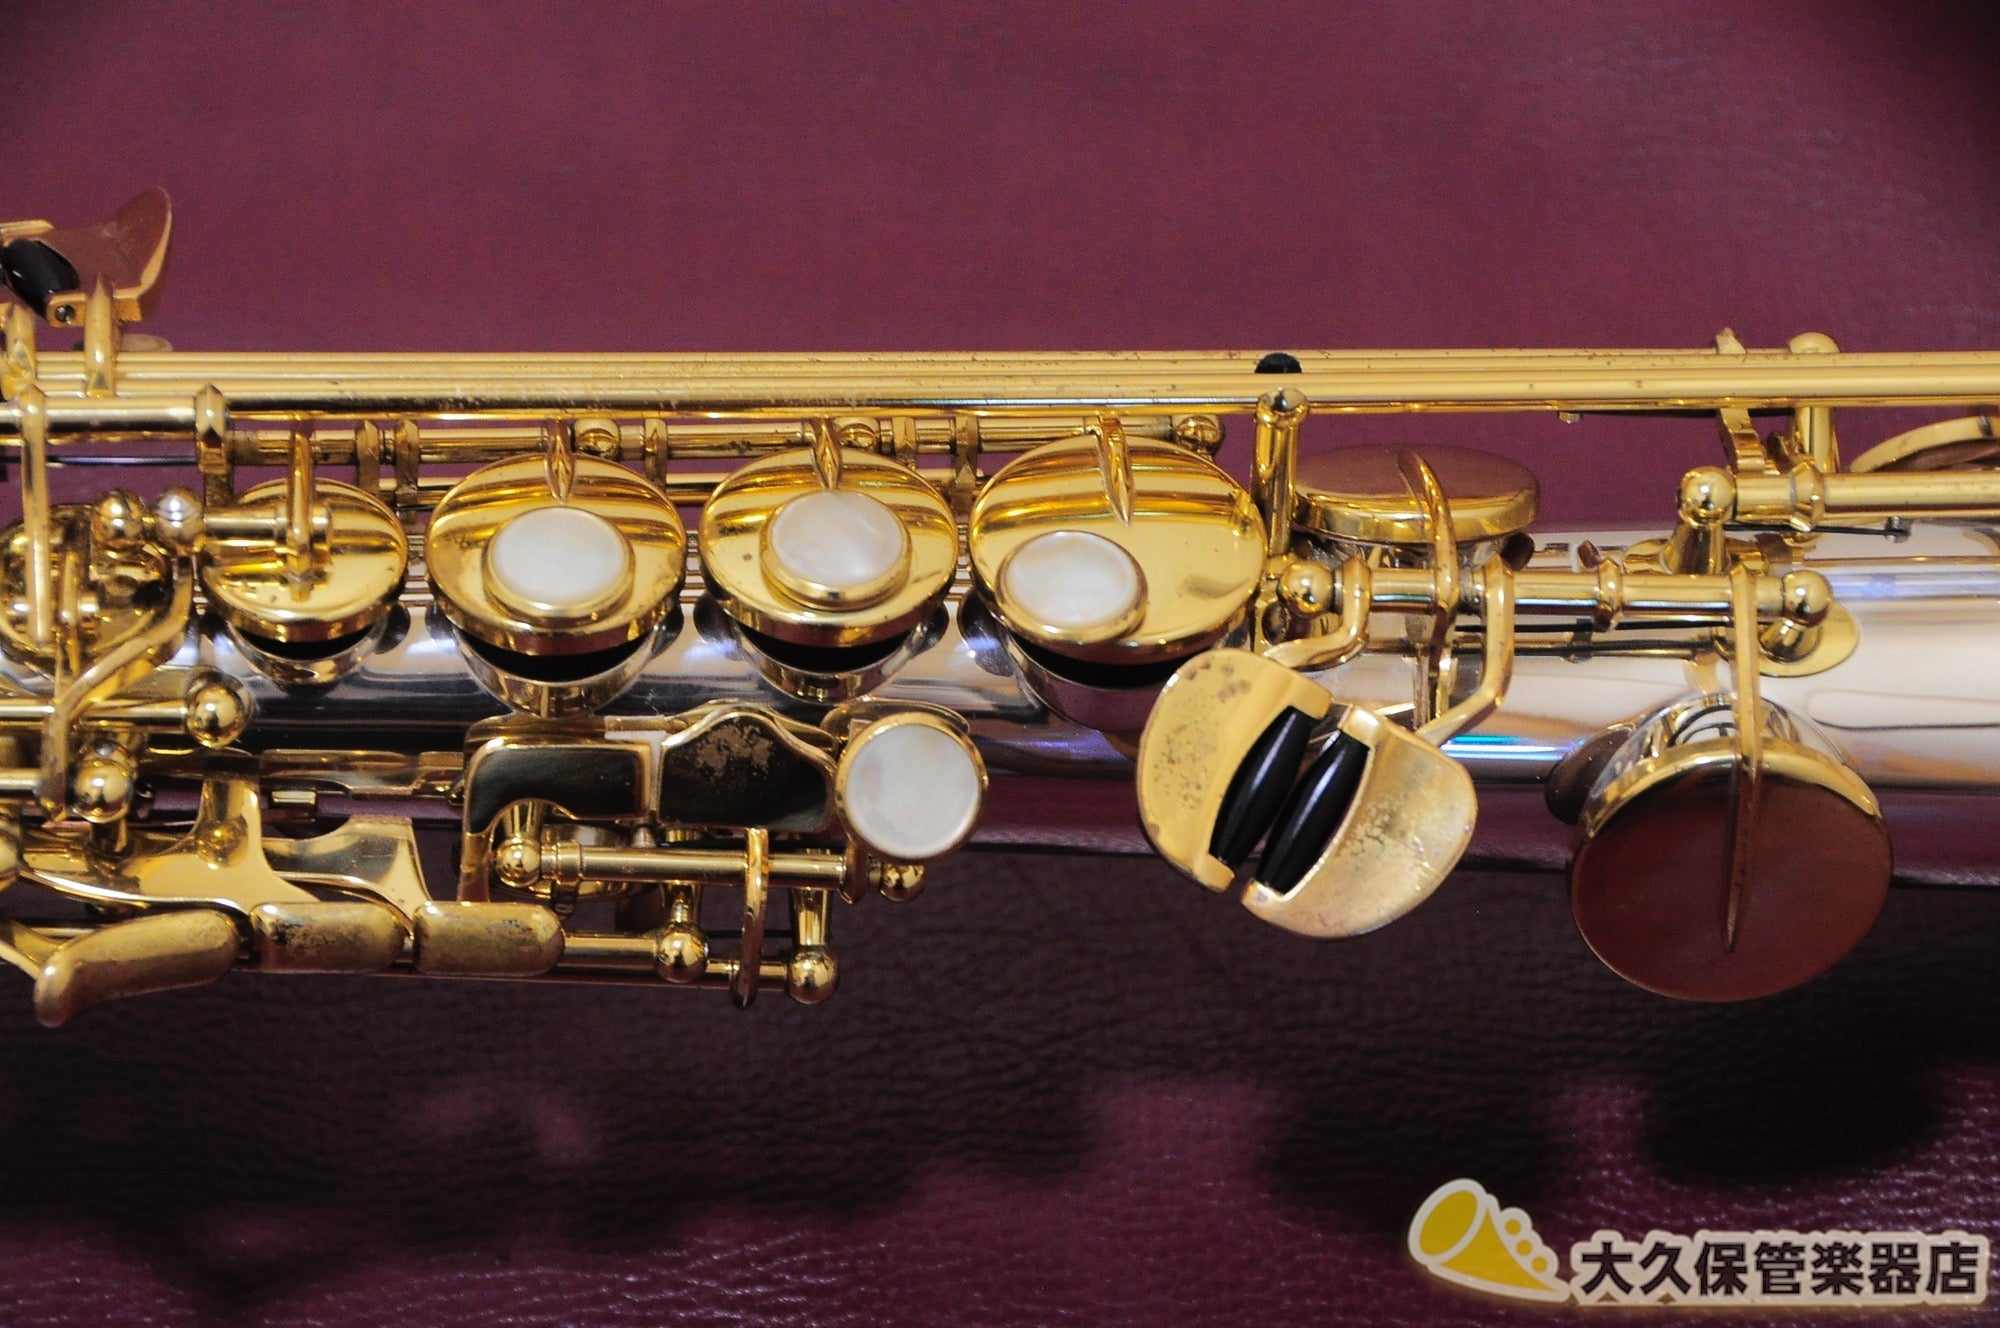 Yanagisawa S-9930 SILVER SONIC Soprano Saxophone